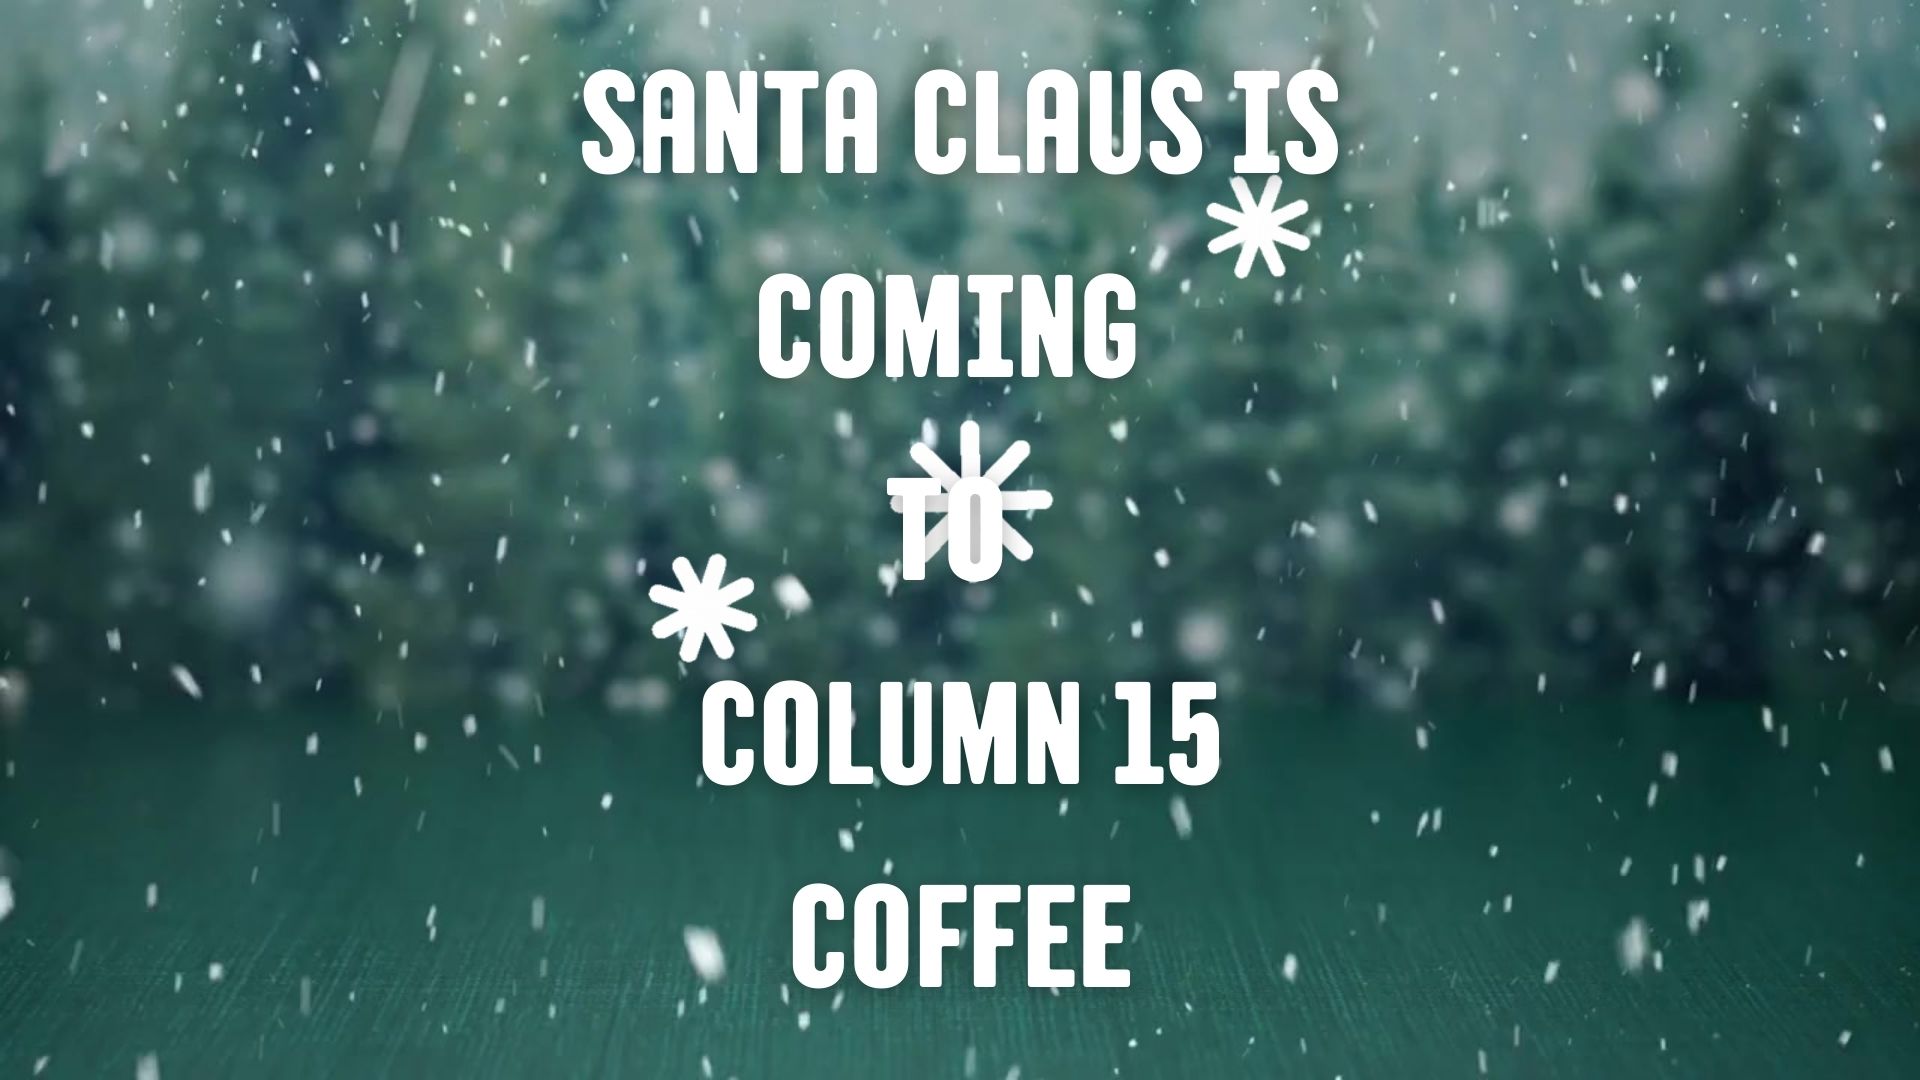 Column15 Santa Clause Event Image